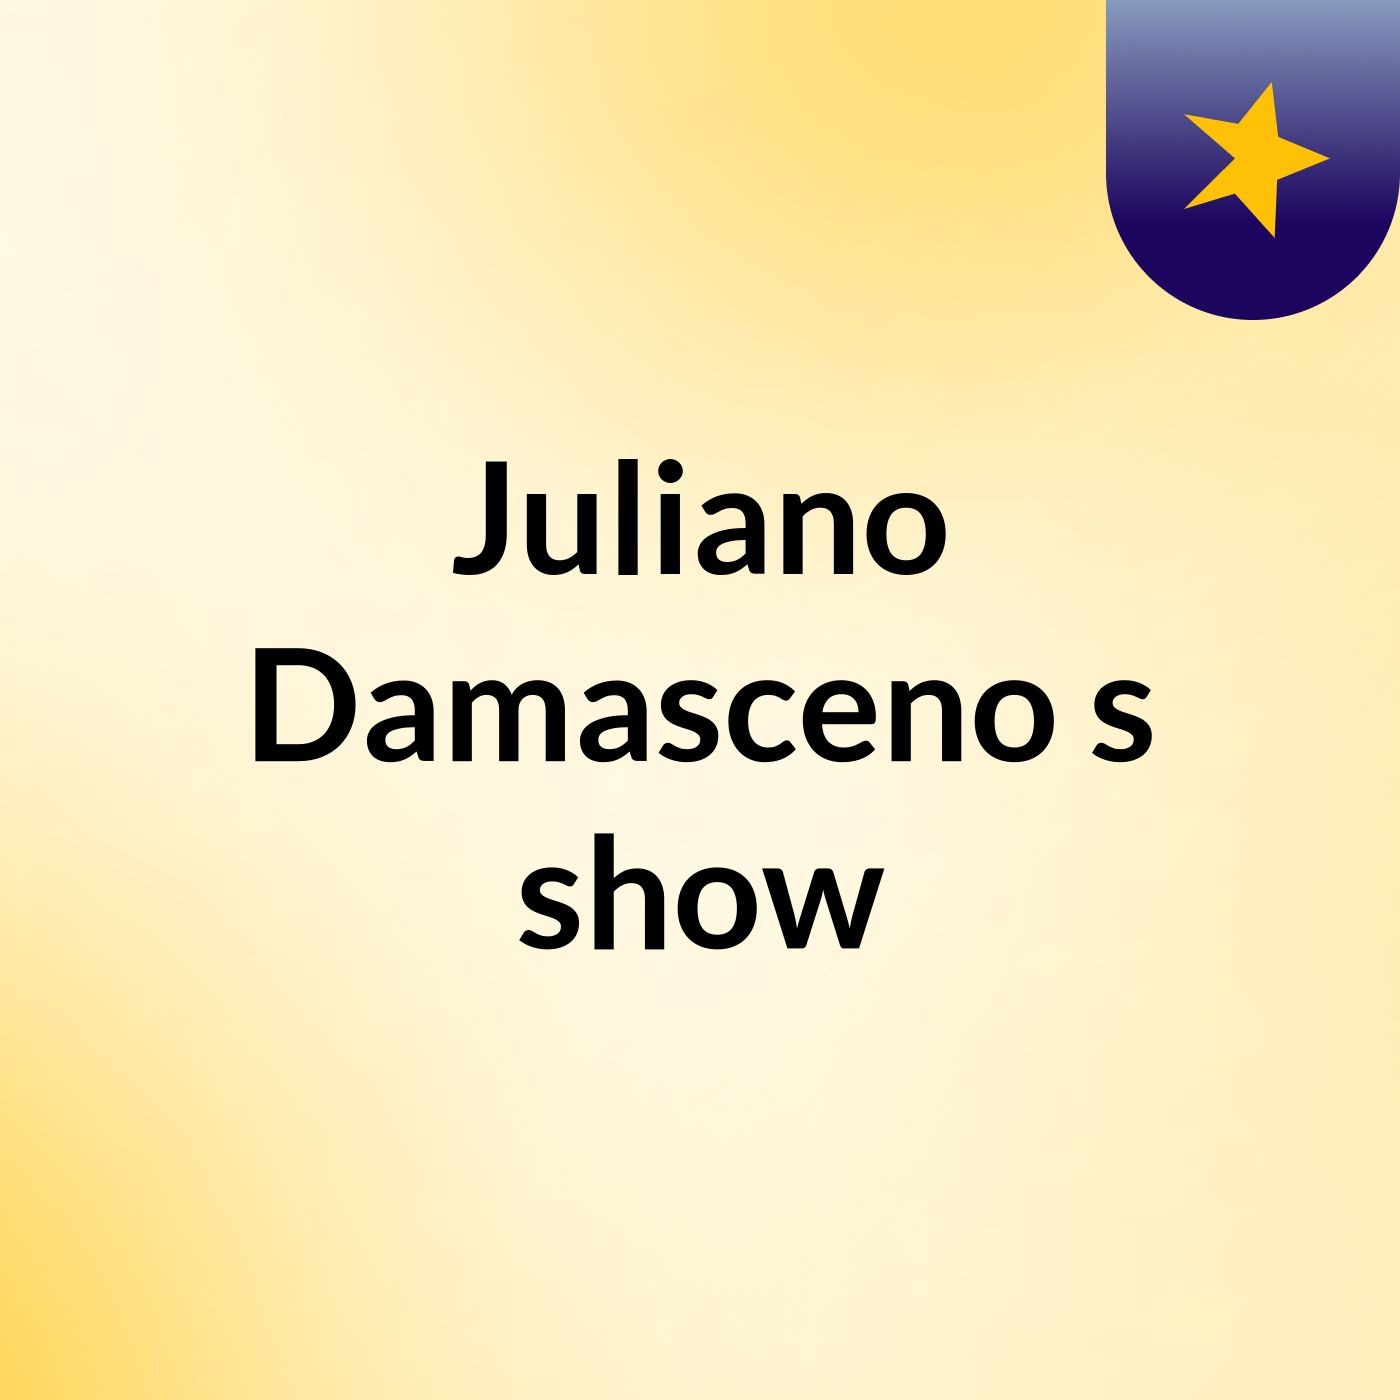 Juliano Damasceno's show